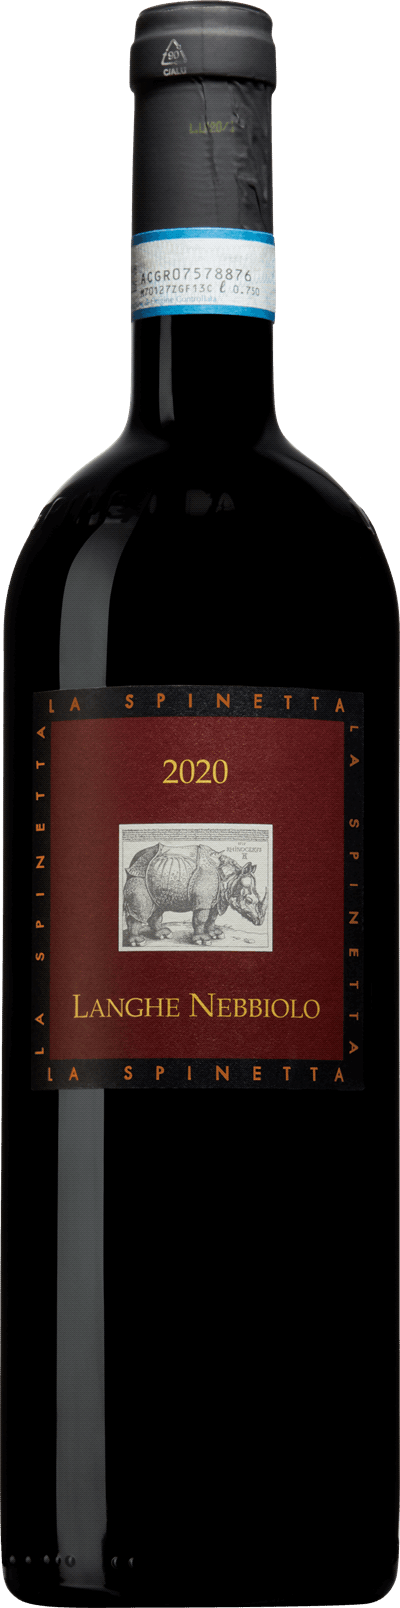 La Spinetta Langhe Nebbiolo, 2021